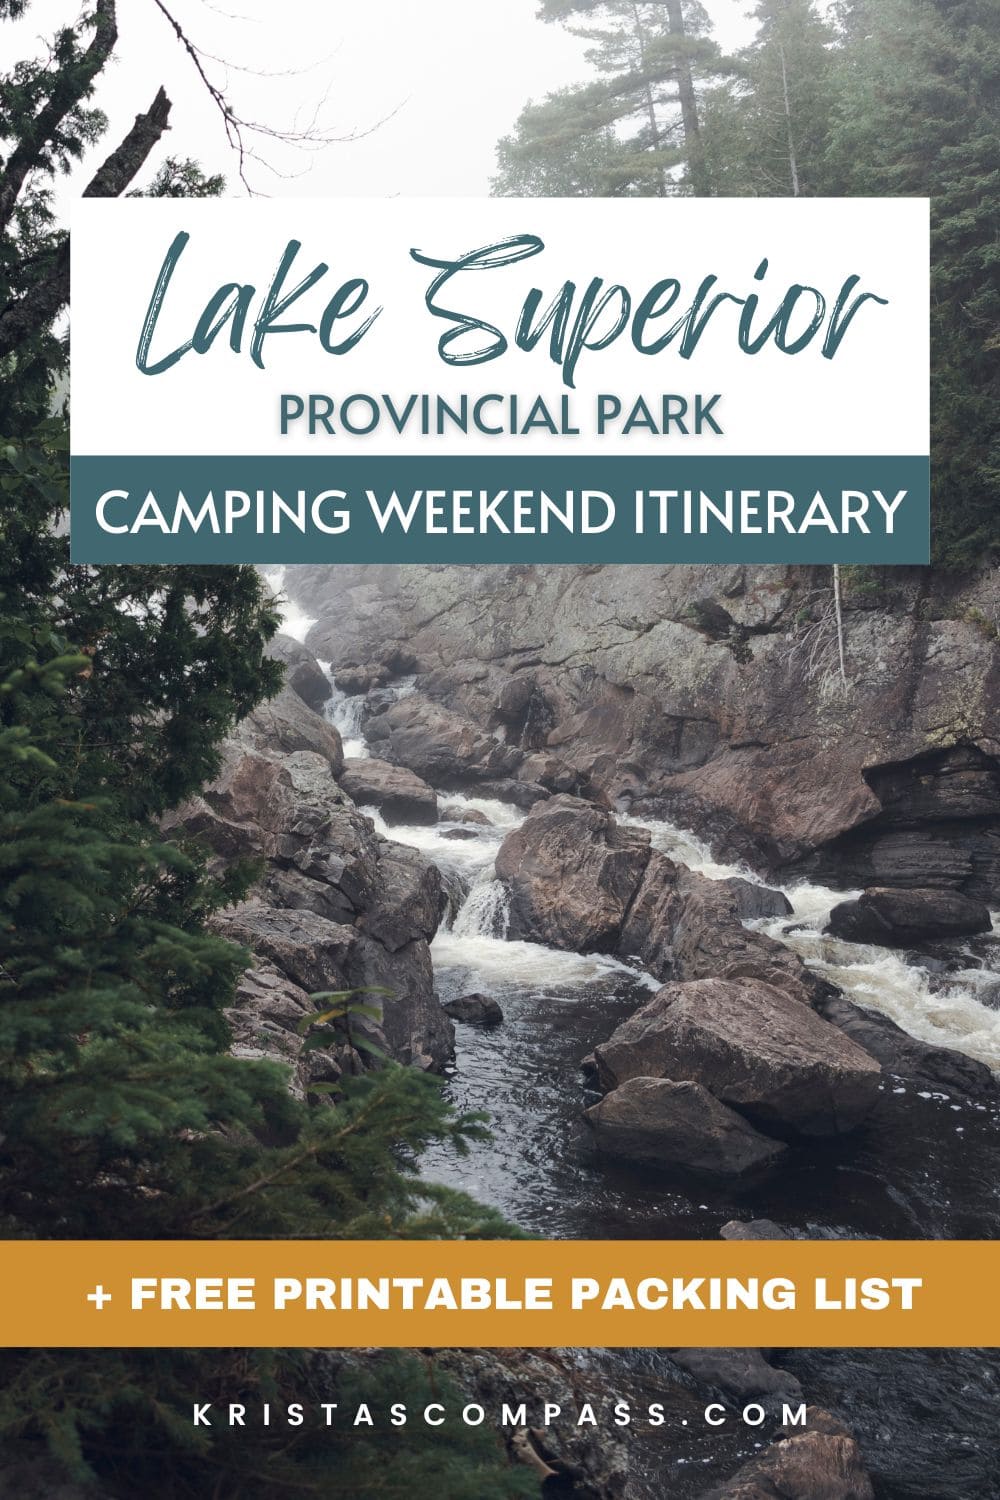 Camping Trip Itineraries for Lake Superior Provincial Park Camping Trip Pinterest Pin